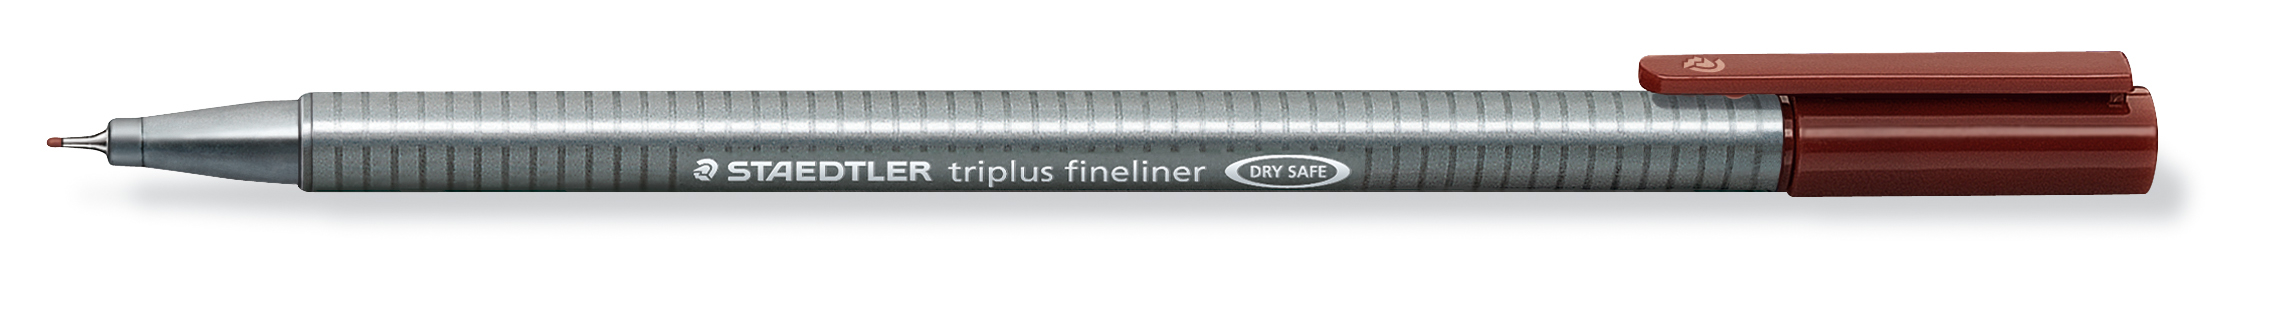 STAEDTLER Triplus Fineliner 0,3mm 334-76 brun